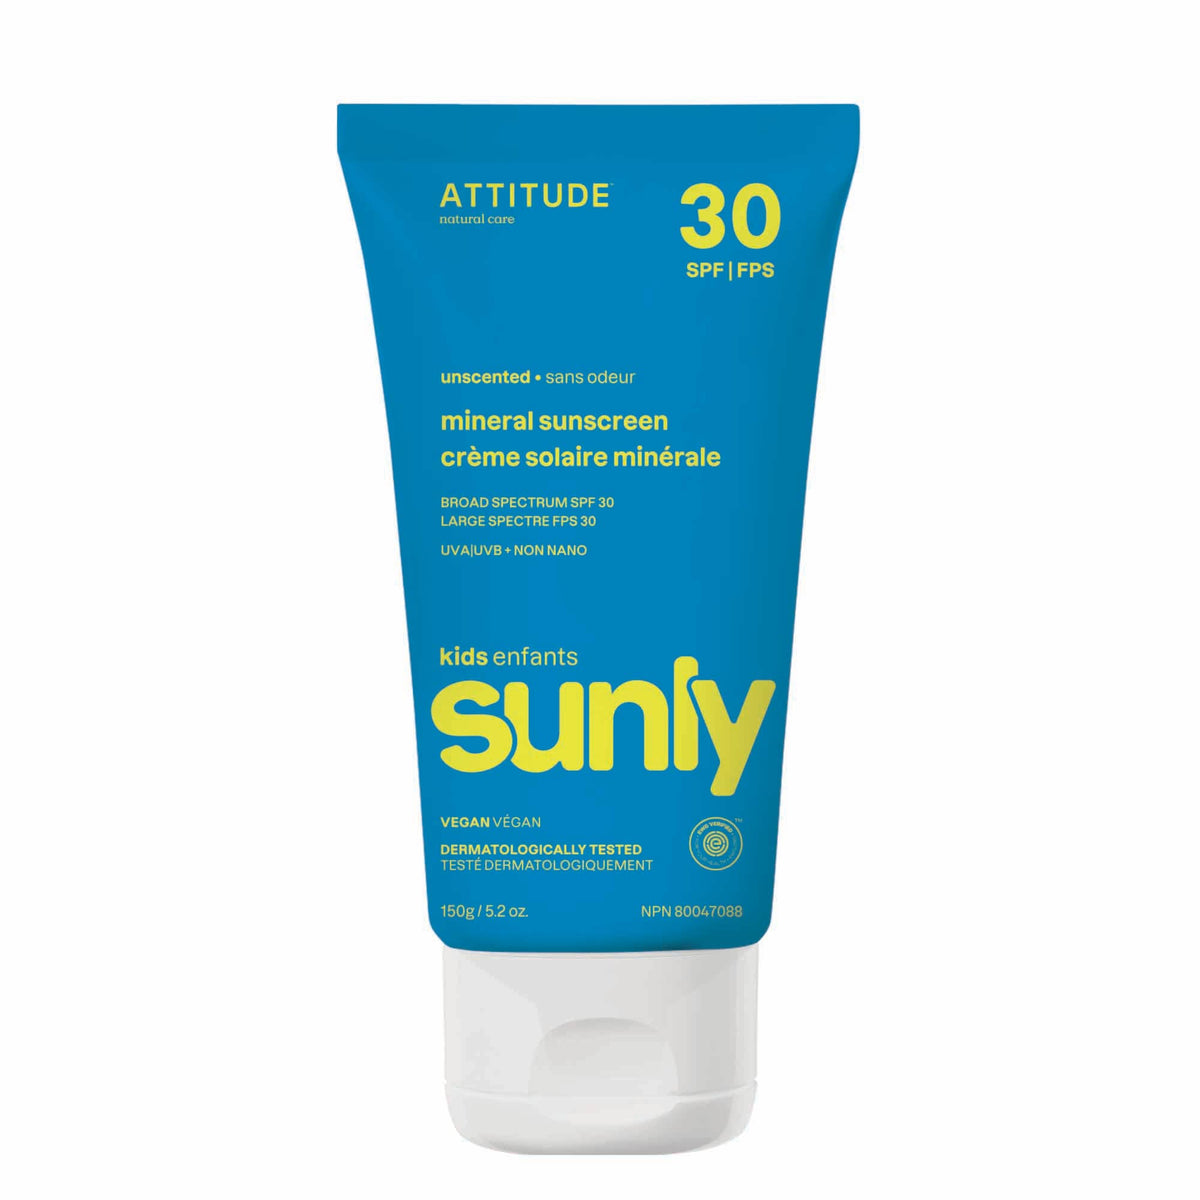 Sunly Kids Sunscreen SPF30-Unscented